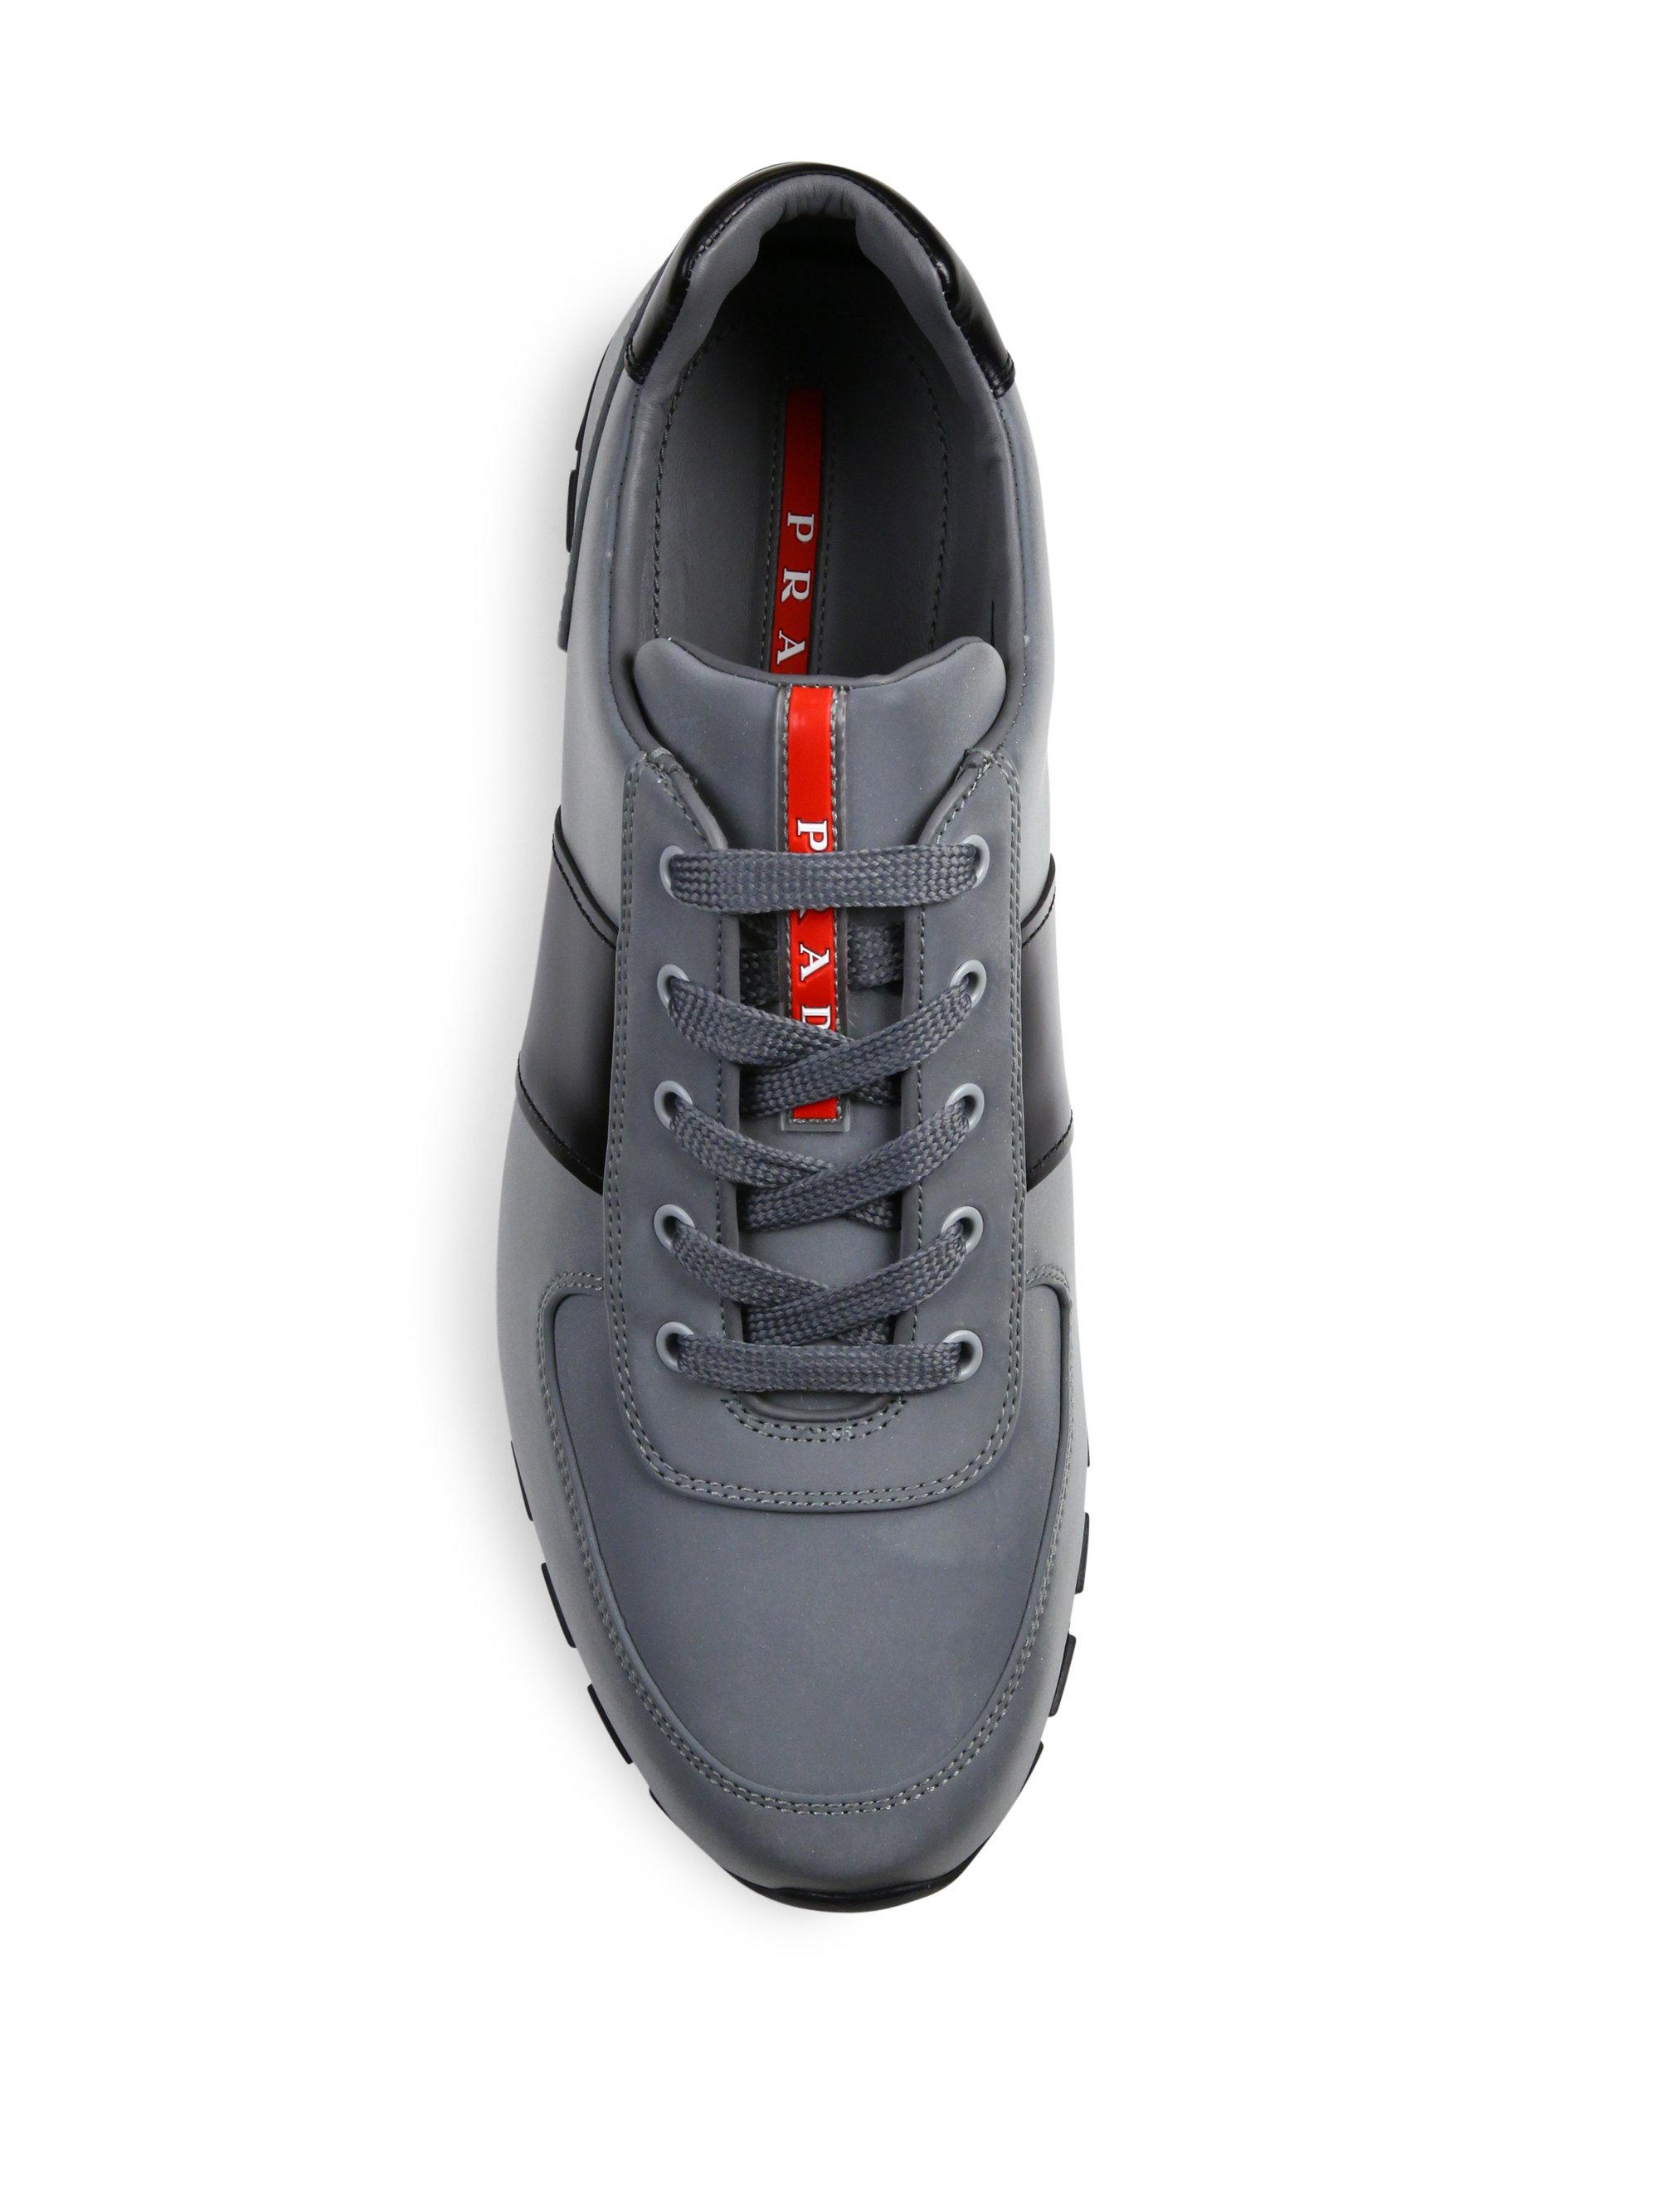 Lyst - Prada Reflective Leather & Nylon Running Sneakers in Black for Men